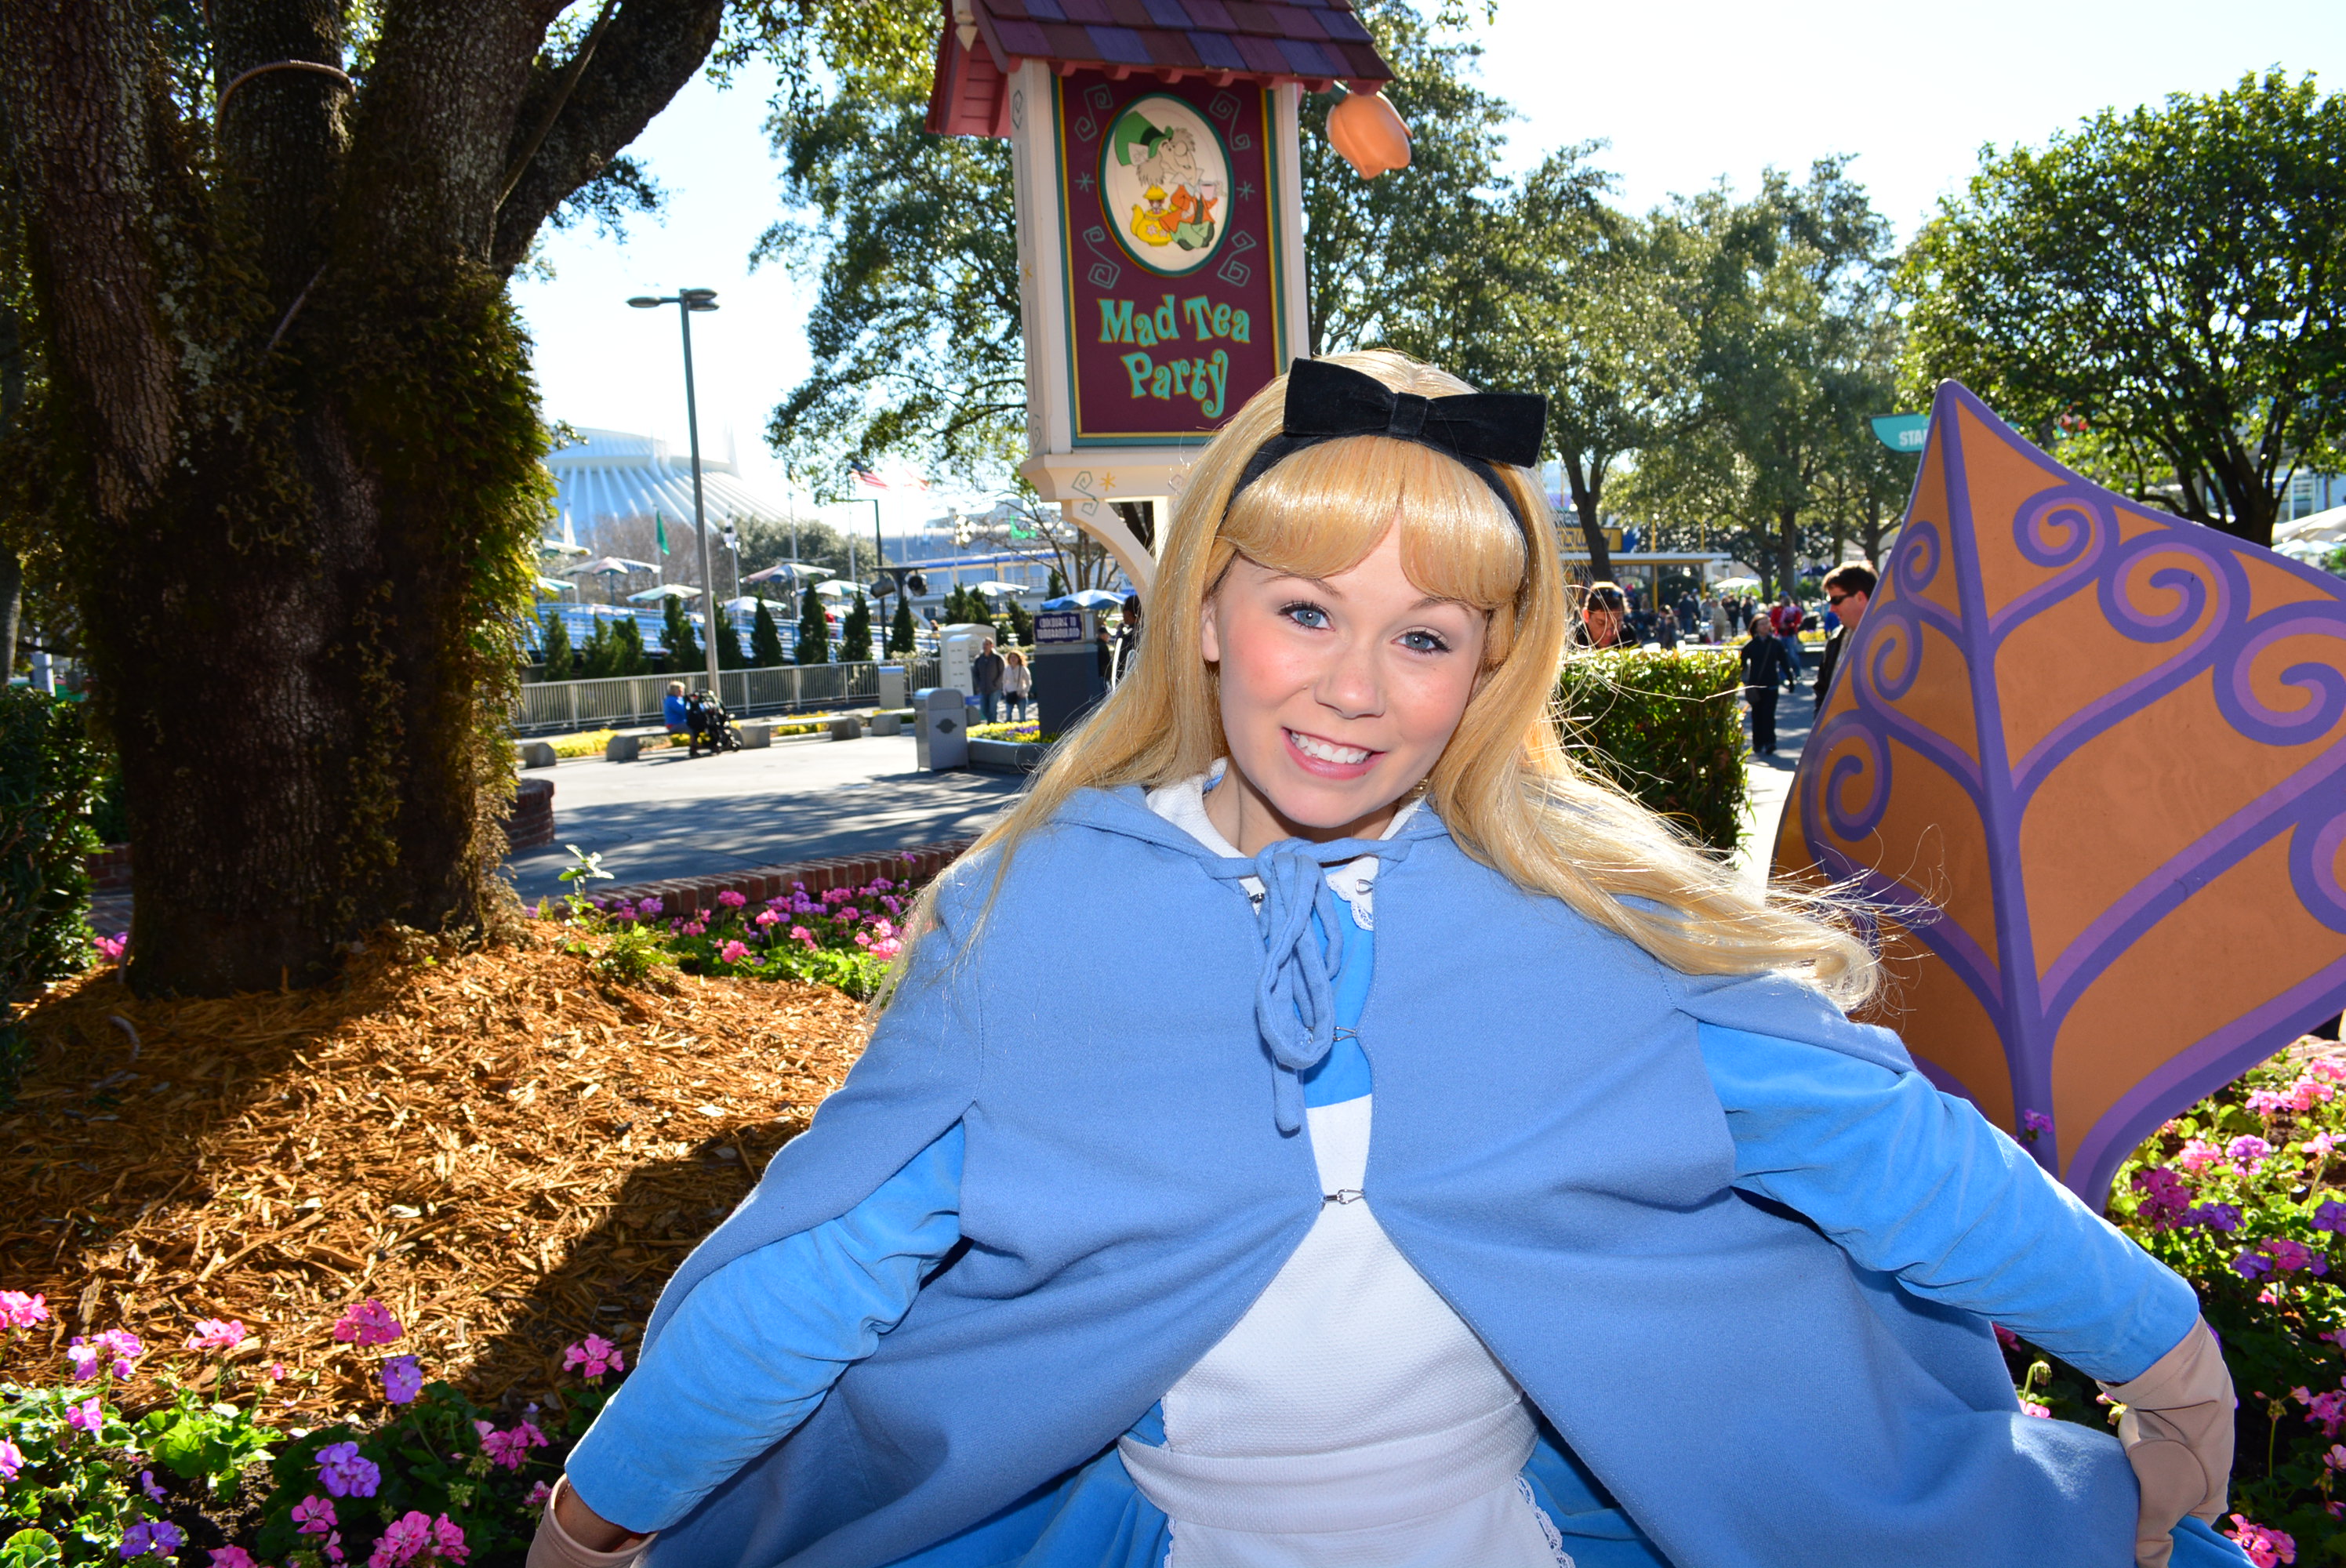 Walt Disney World, Magic Kingdom, Fantasyland, Mad Tea Party, Alice in Wonderland, Meet and Greet